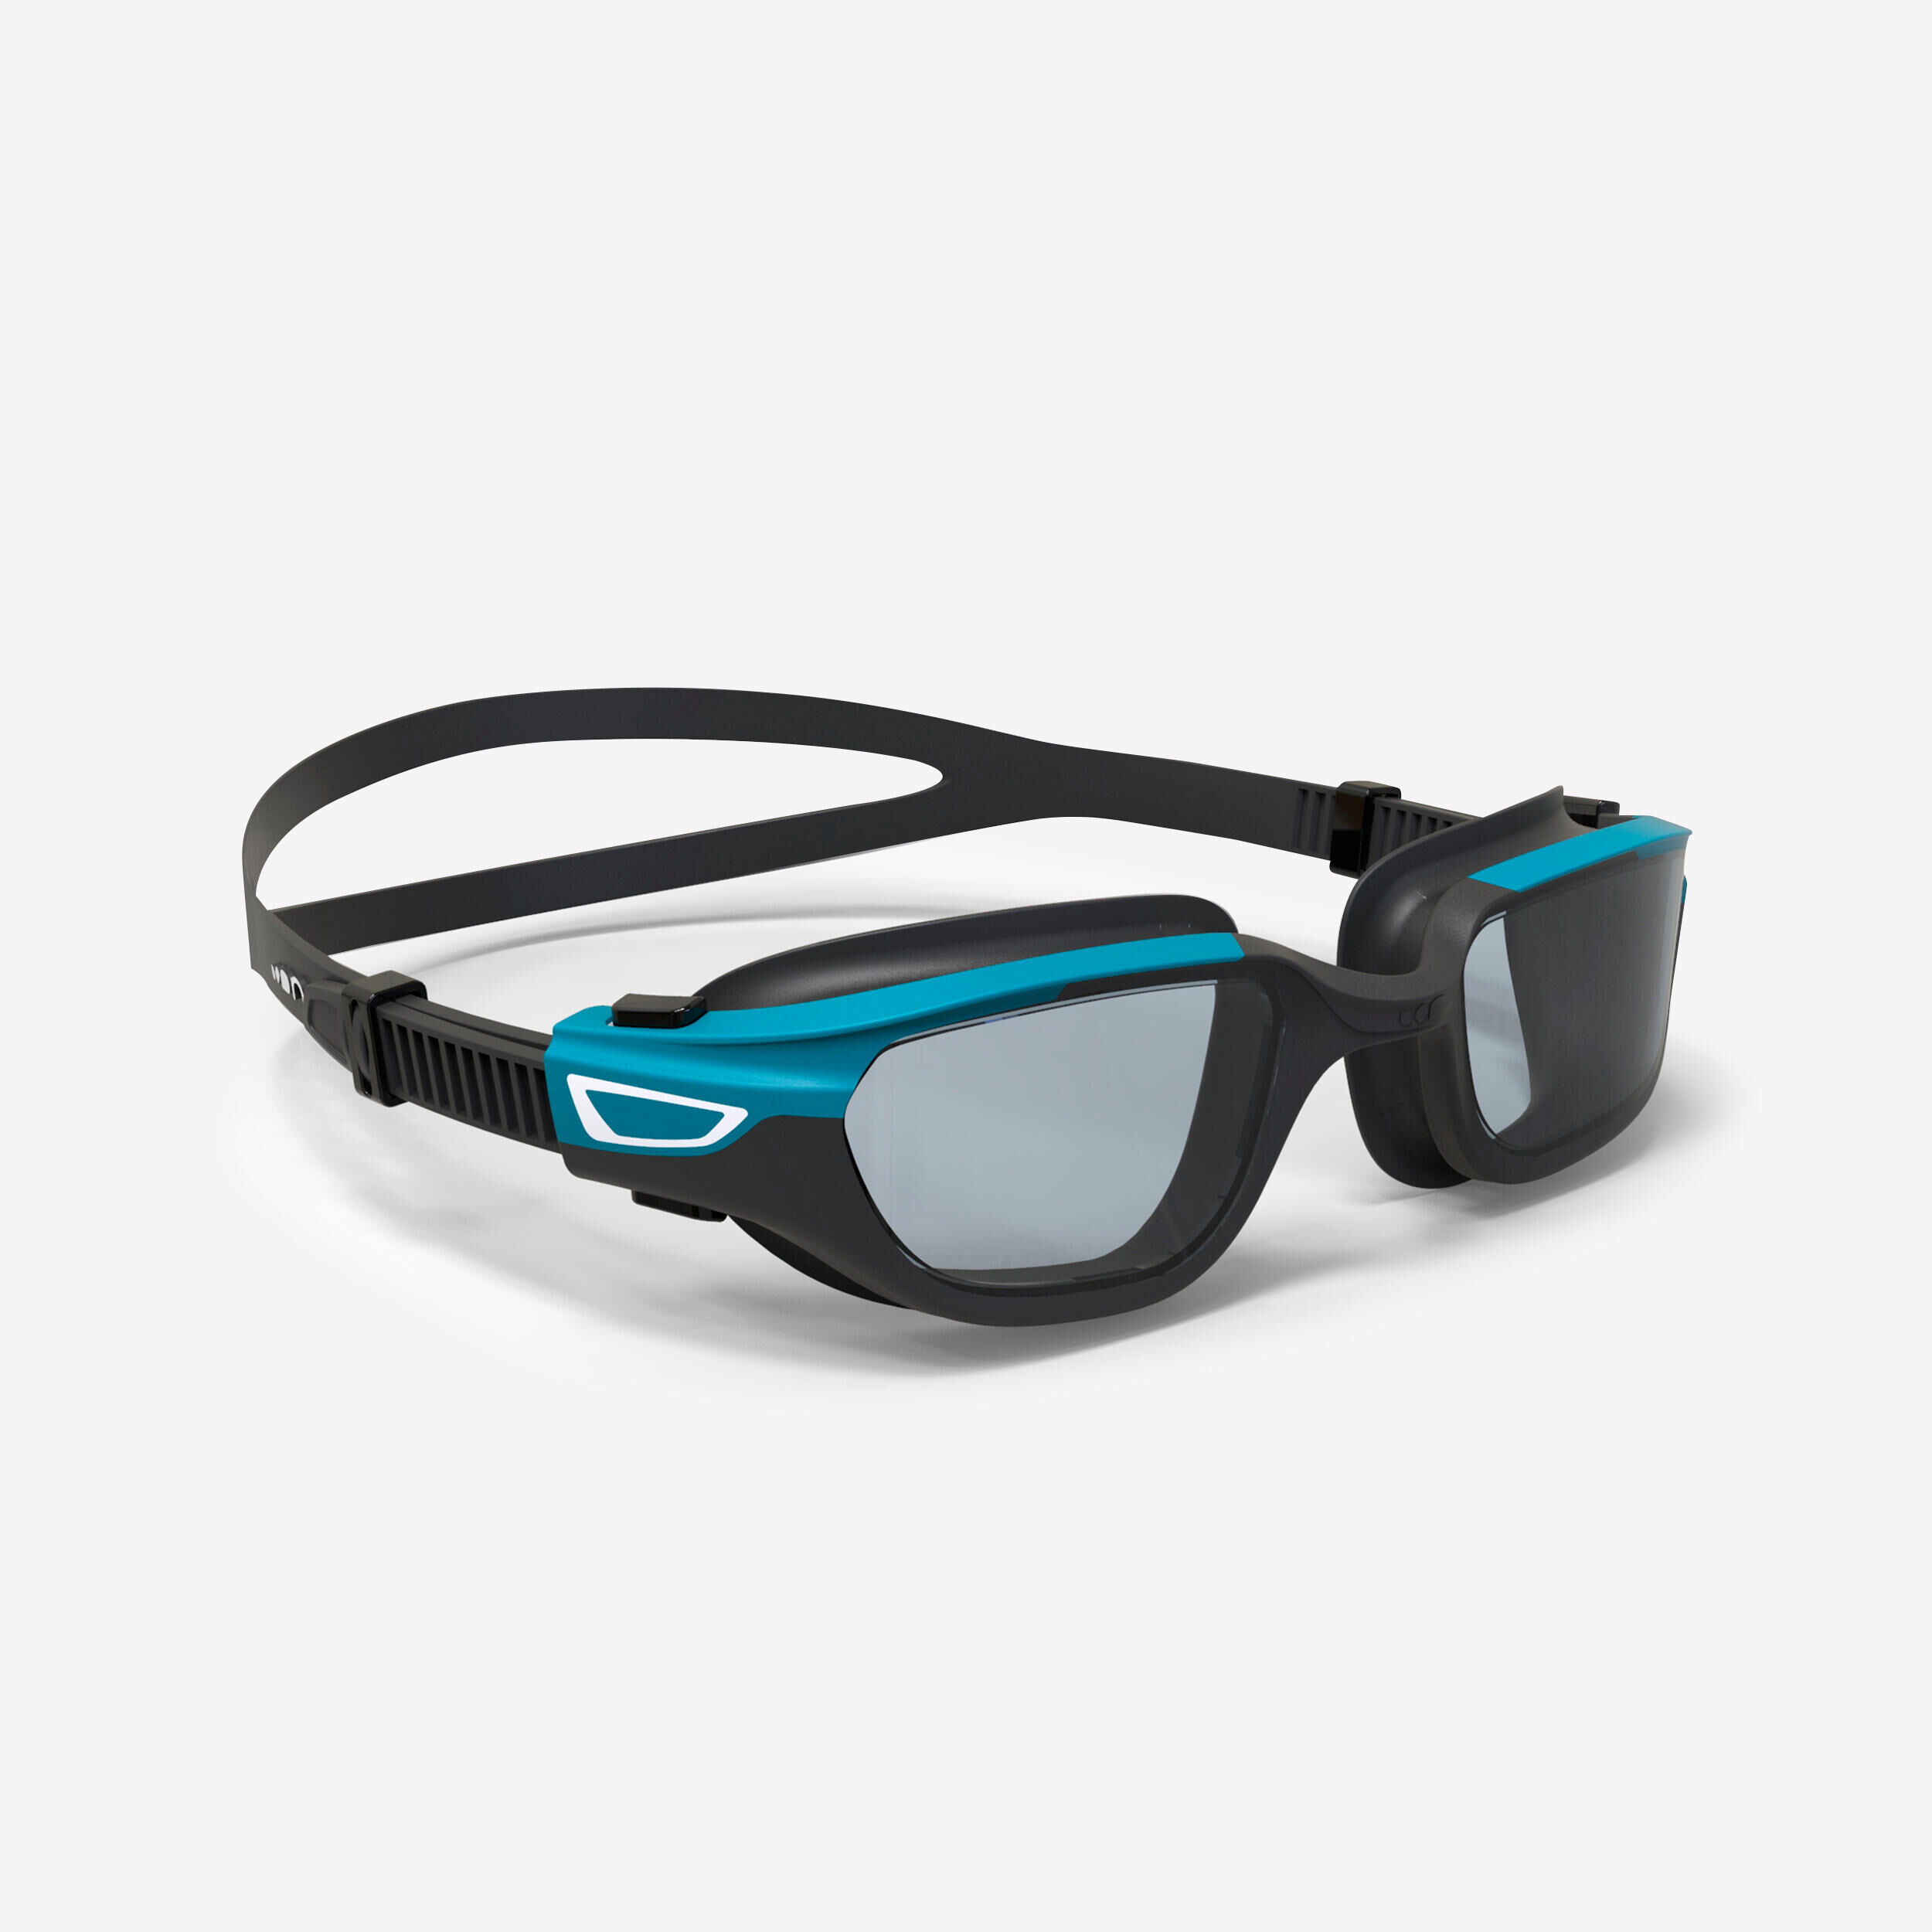 NABAIJI SPIRIT swimming goggles - Polarised lenses - Large size - Black blue